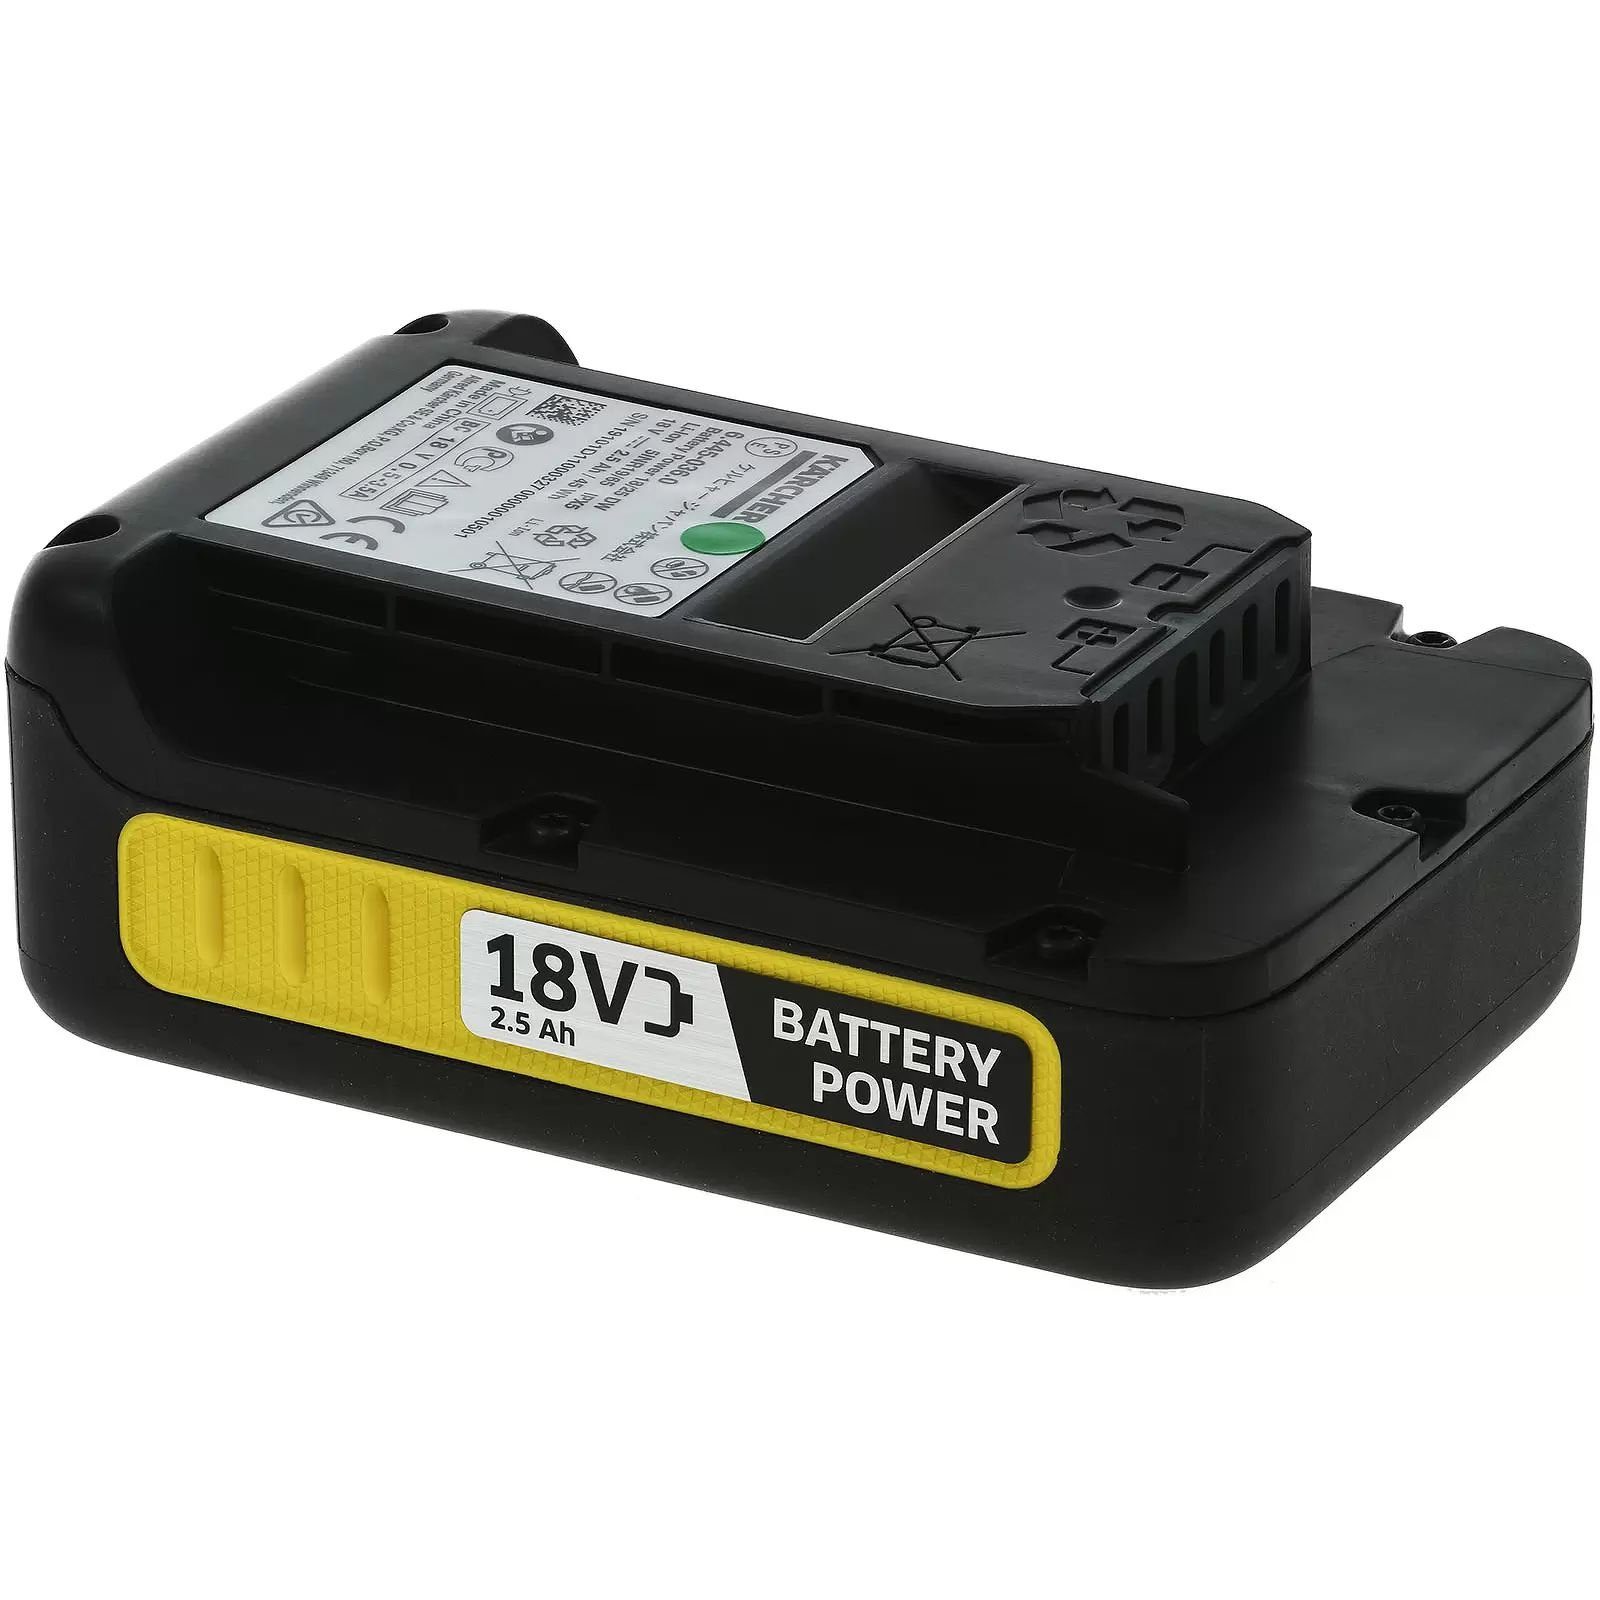 Geräte Battery alle Kärcher Akku 18V für Batt KÄRCHER Power Kärcher Akku 18/25 der